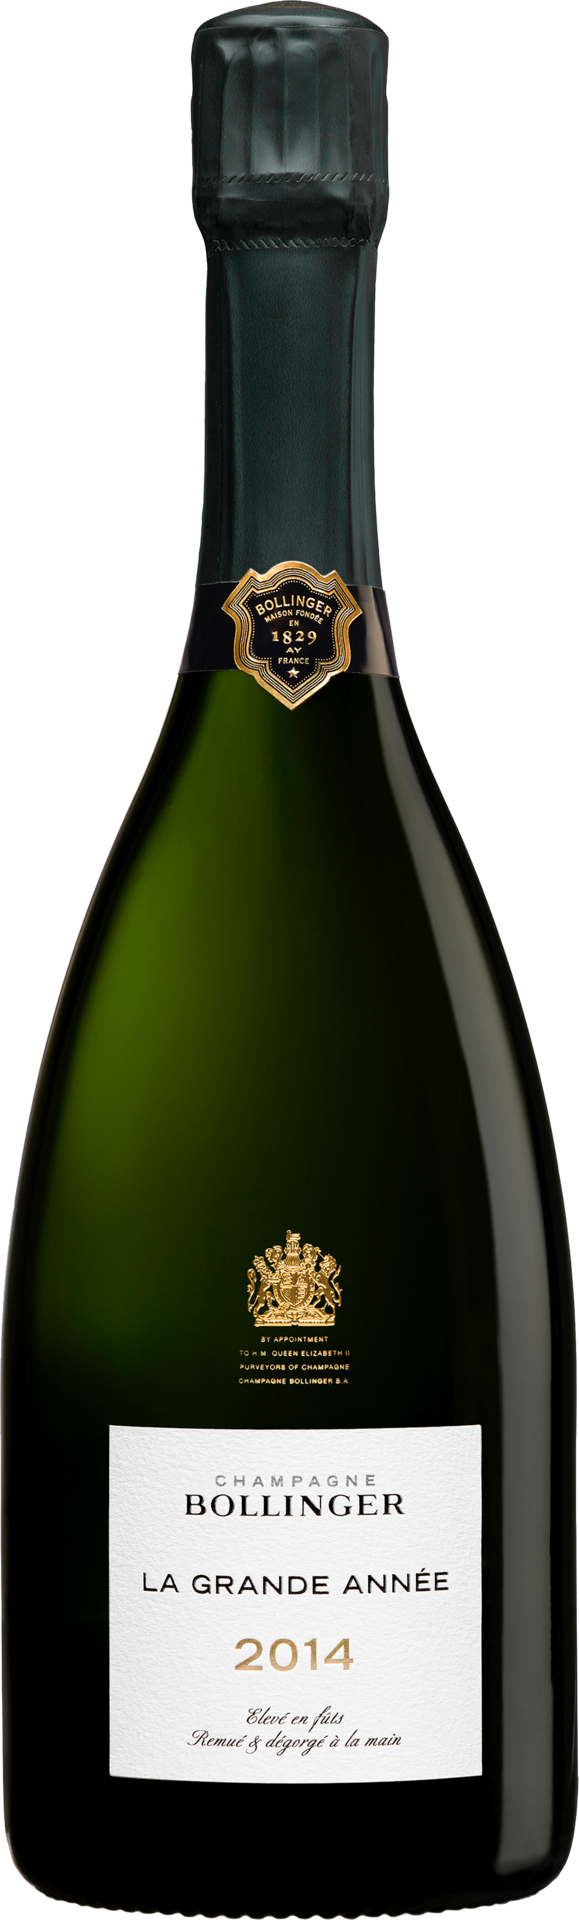 Champagne Bollinger La Grande Année Magnum - 2014